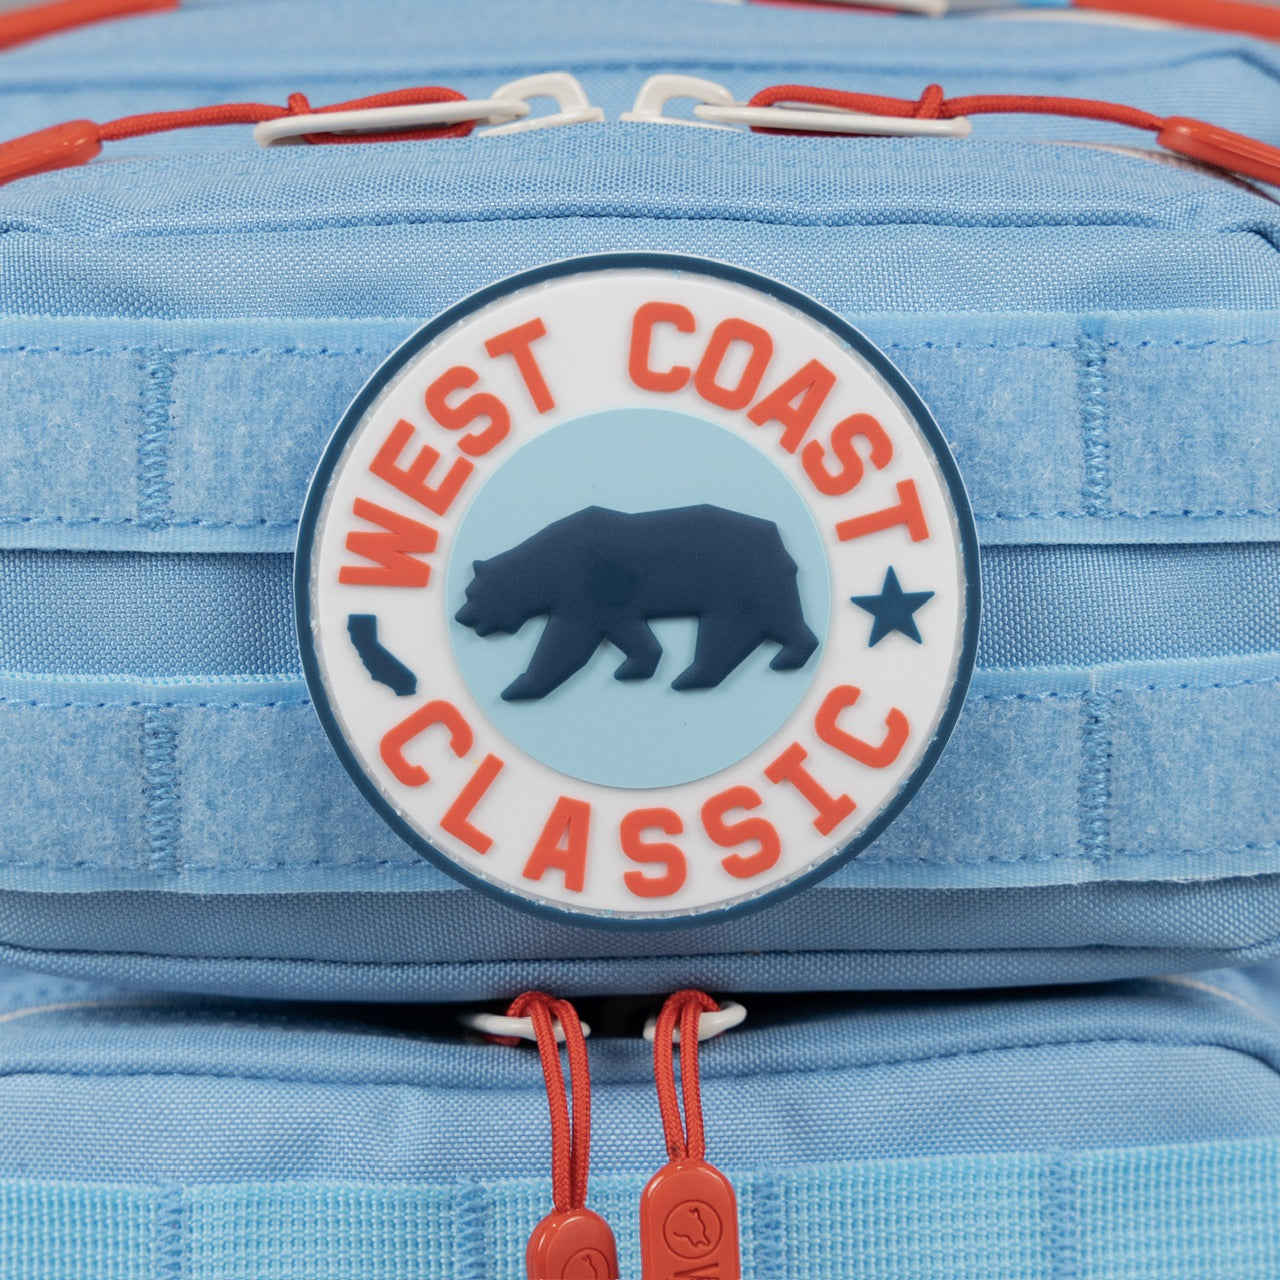 9L Backpack Mini West Coast Classic